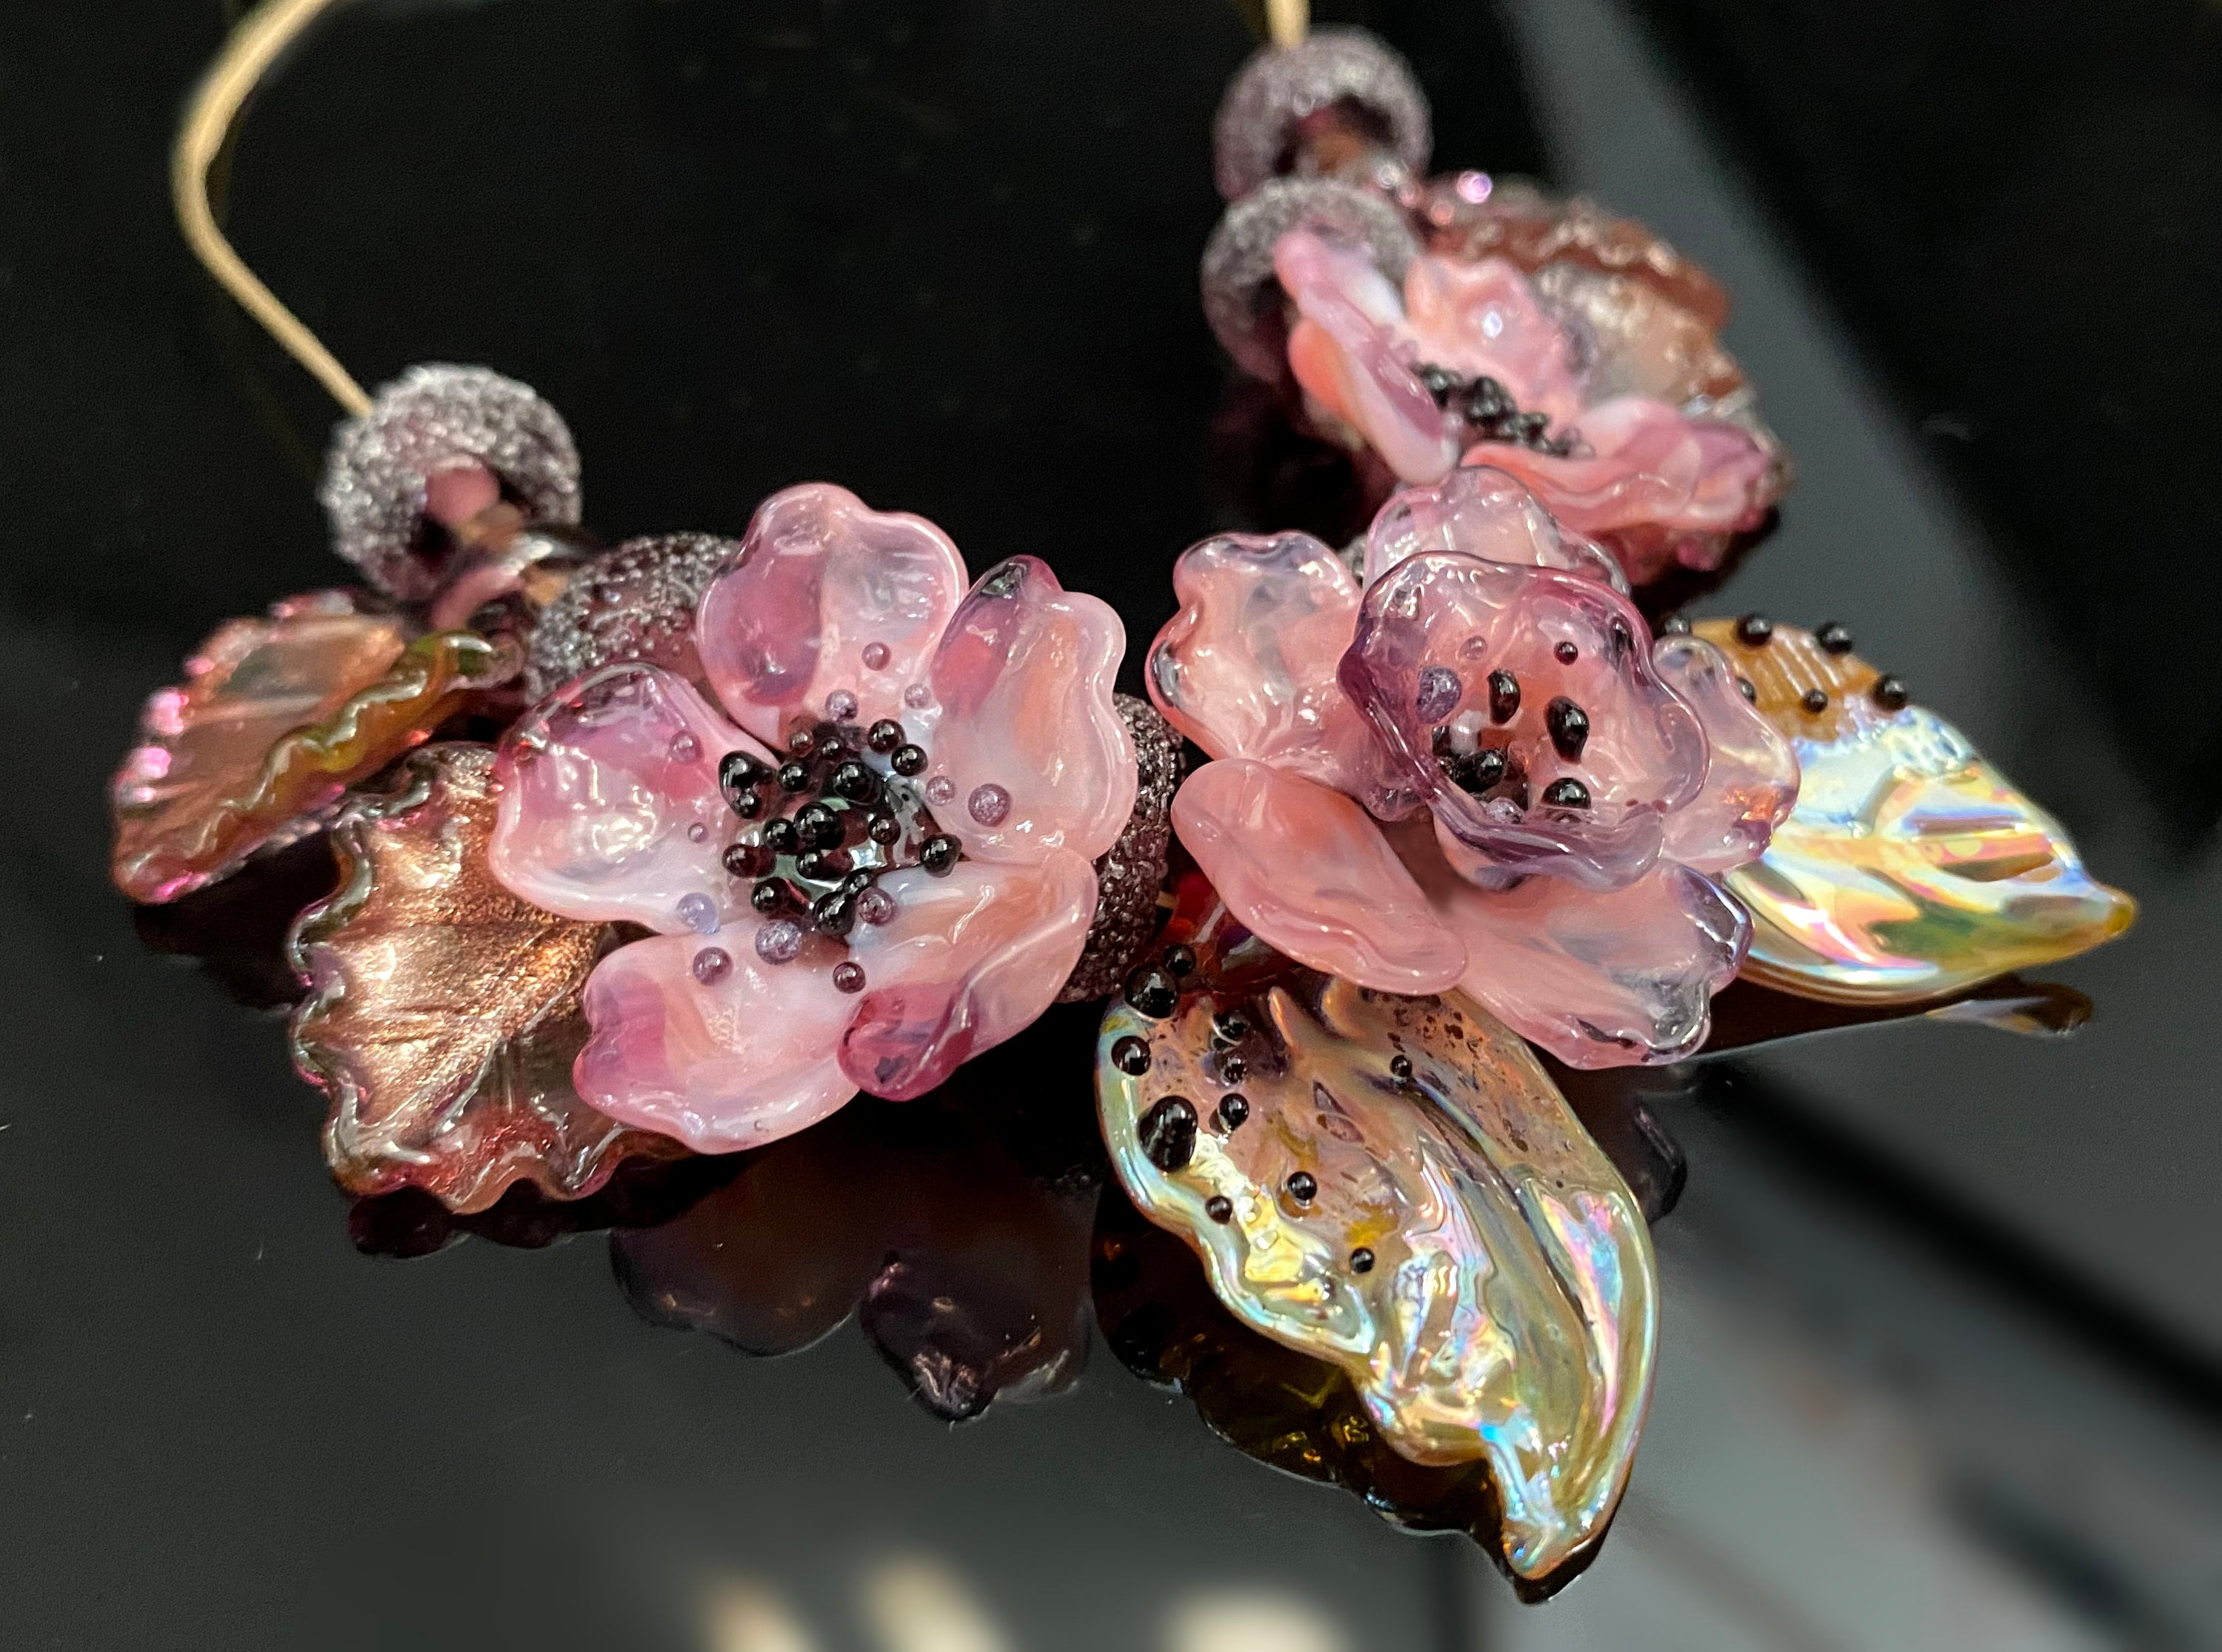 DIY Yellow Bee Bead Fringe Earrings Kit Flowers Beaded Earrings